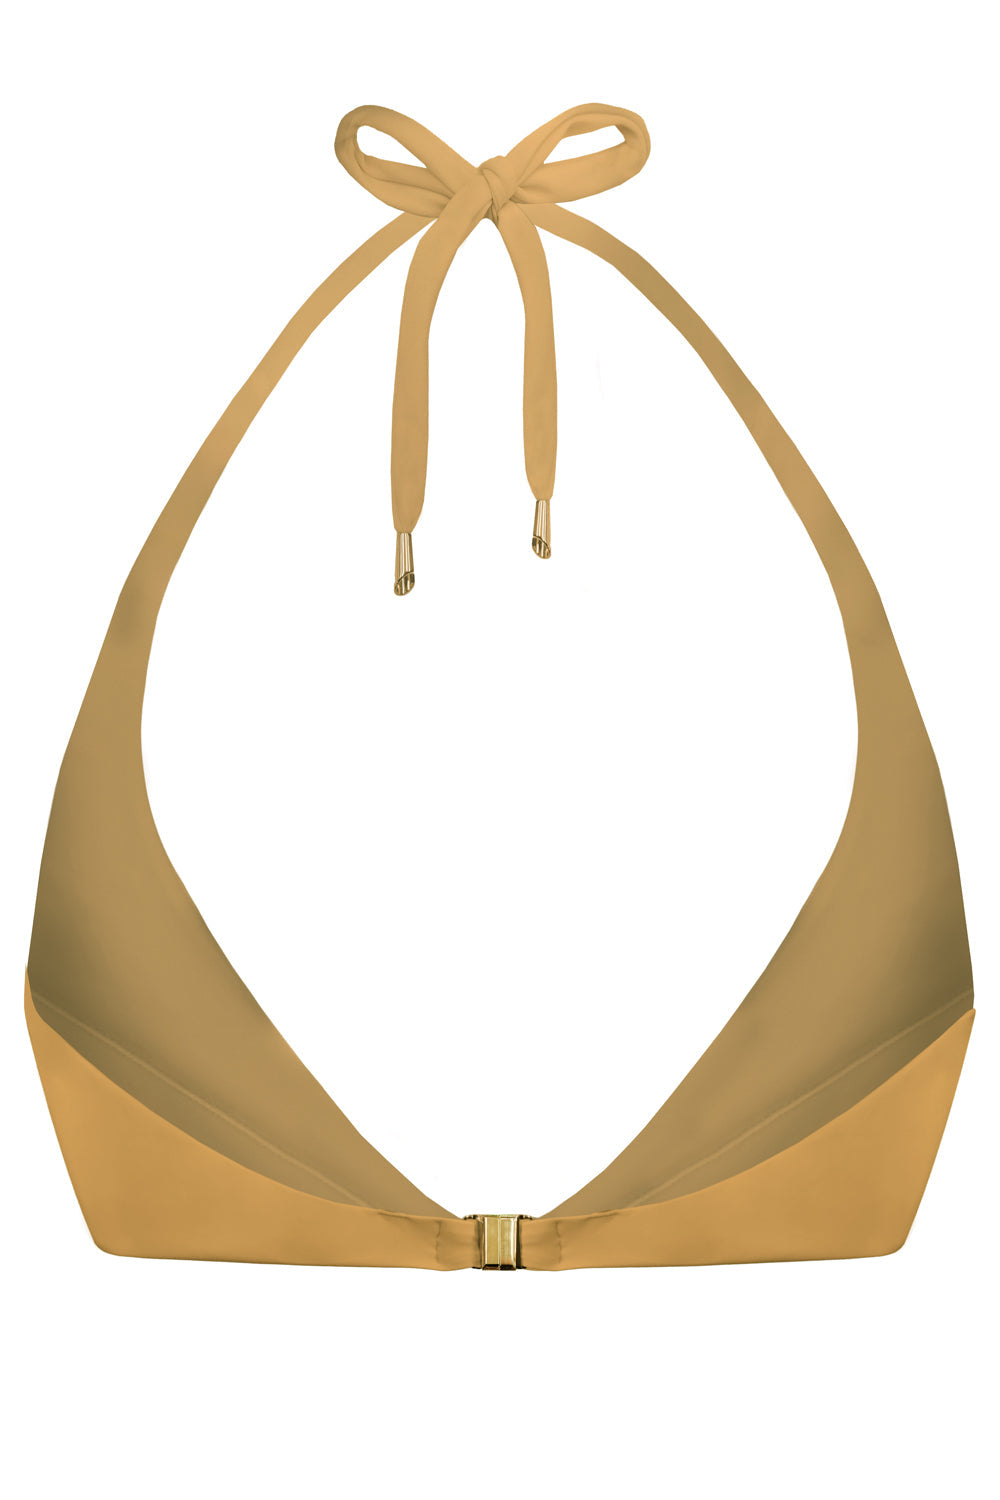 Radiya Golden Beige bikini top - Bikini top by yesUndress. Shop on yesUndress